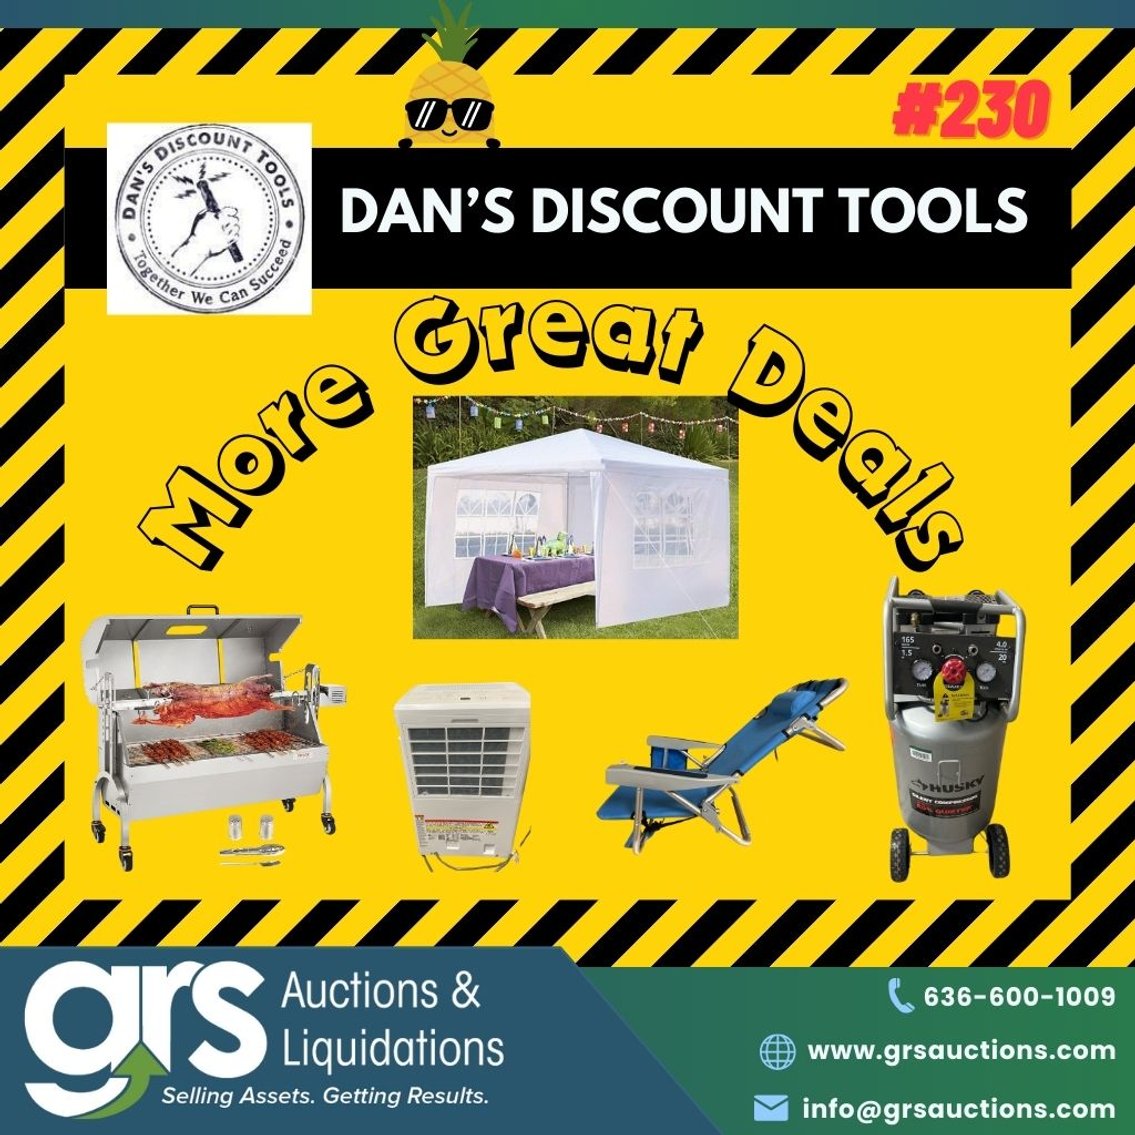 Dan's Discount Tools #230